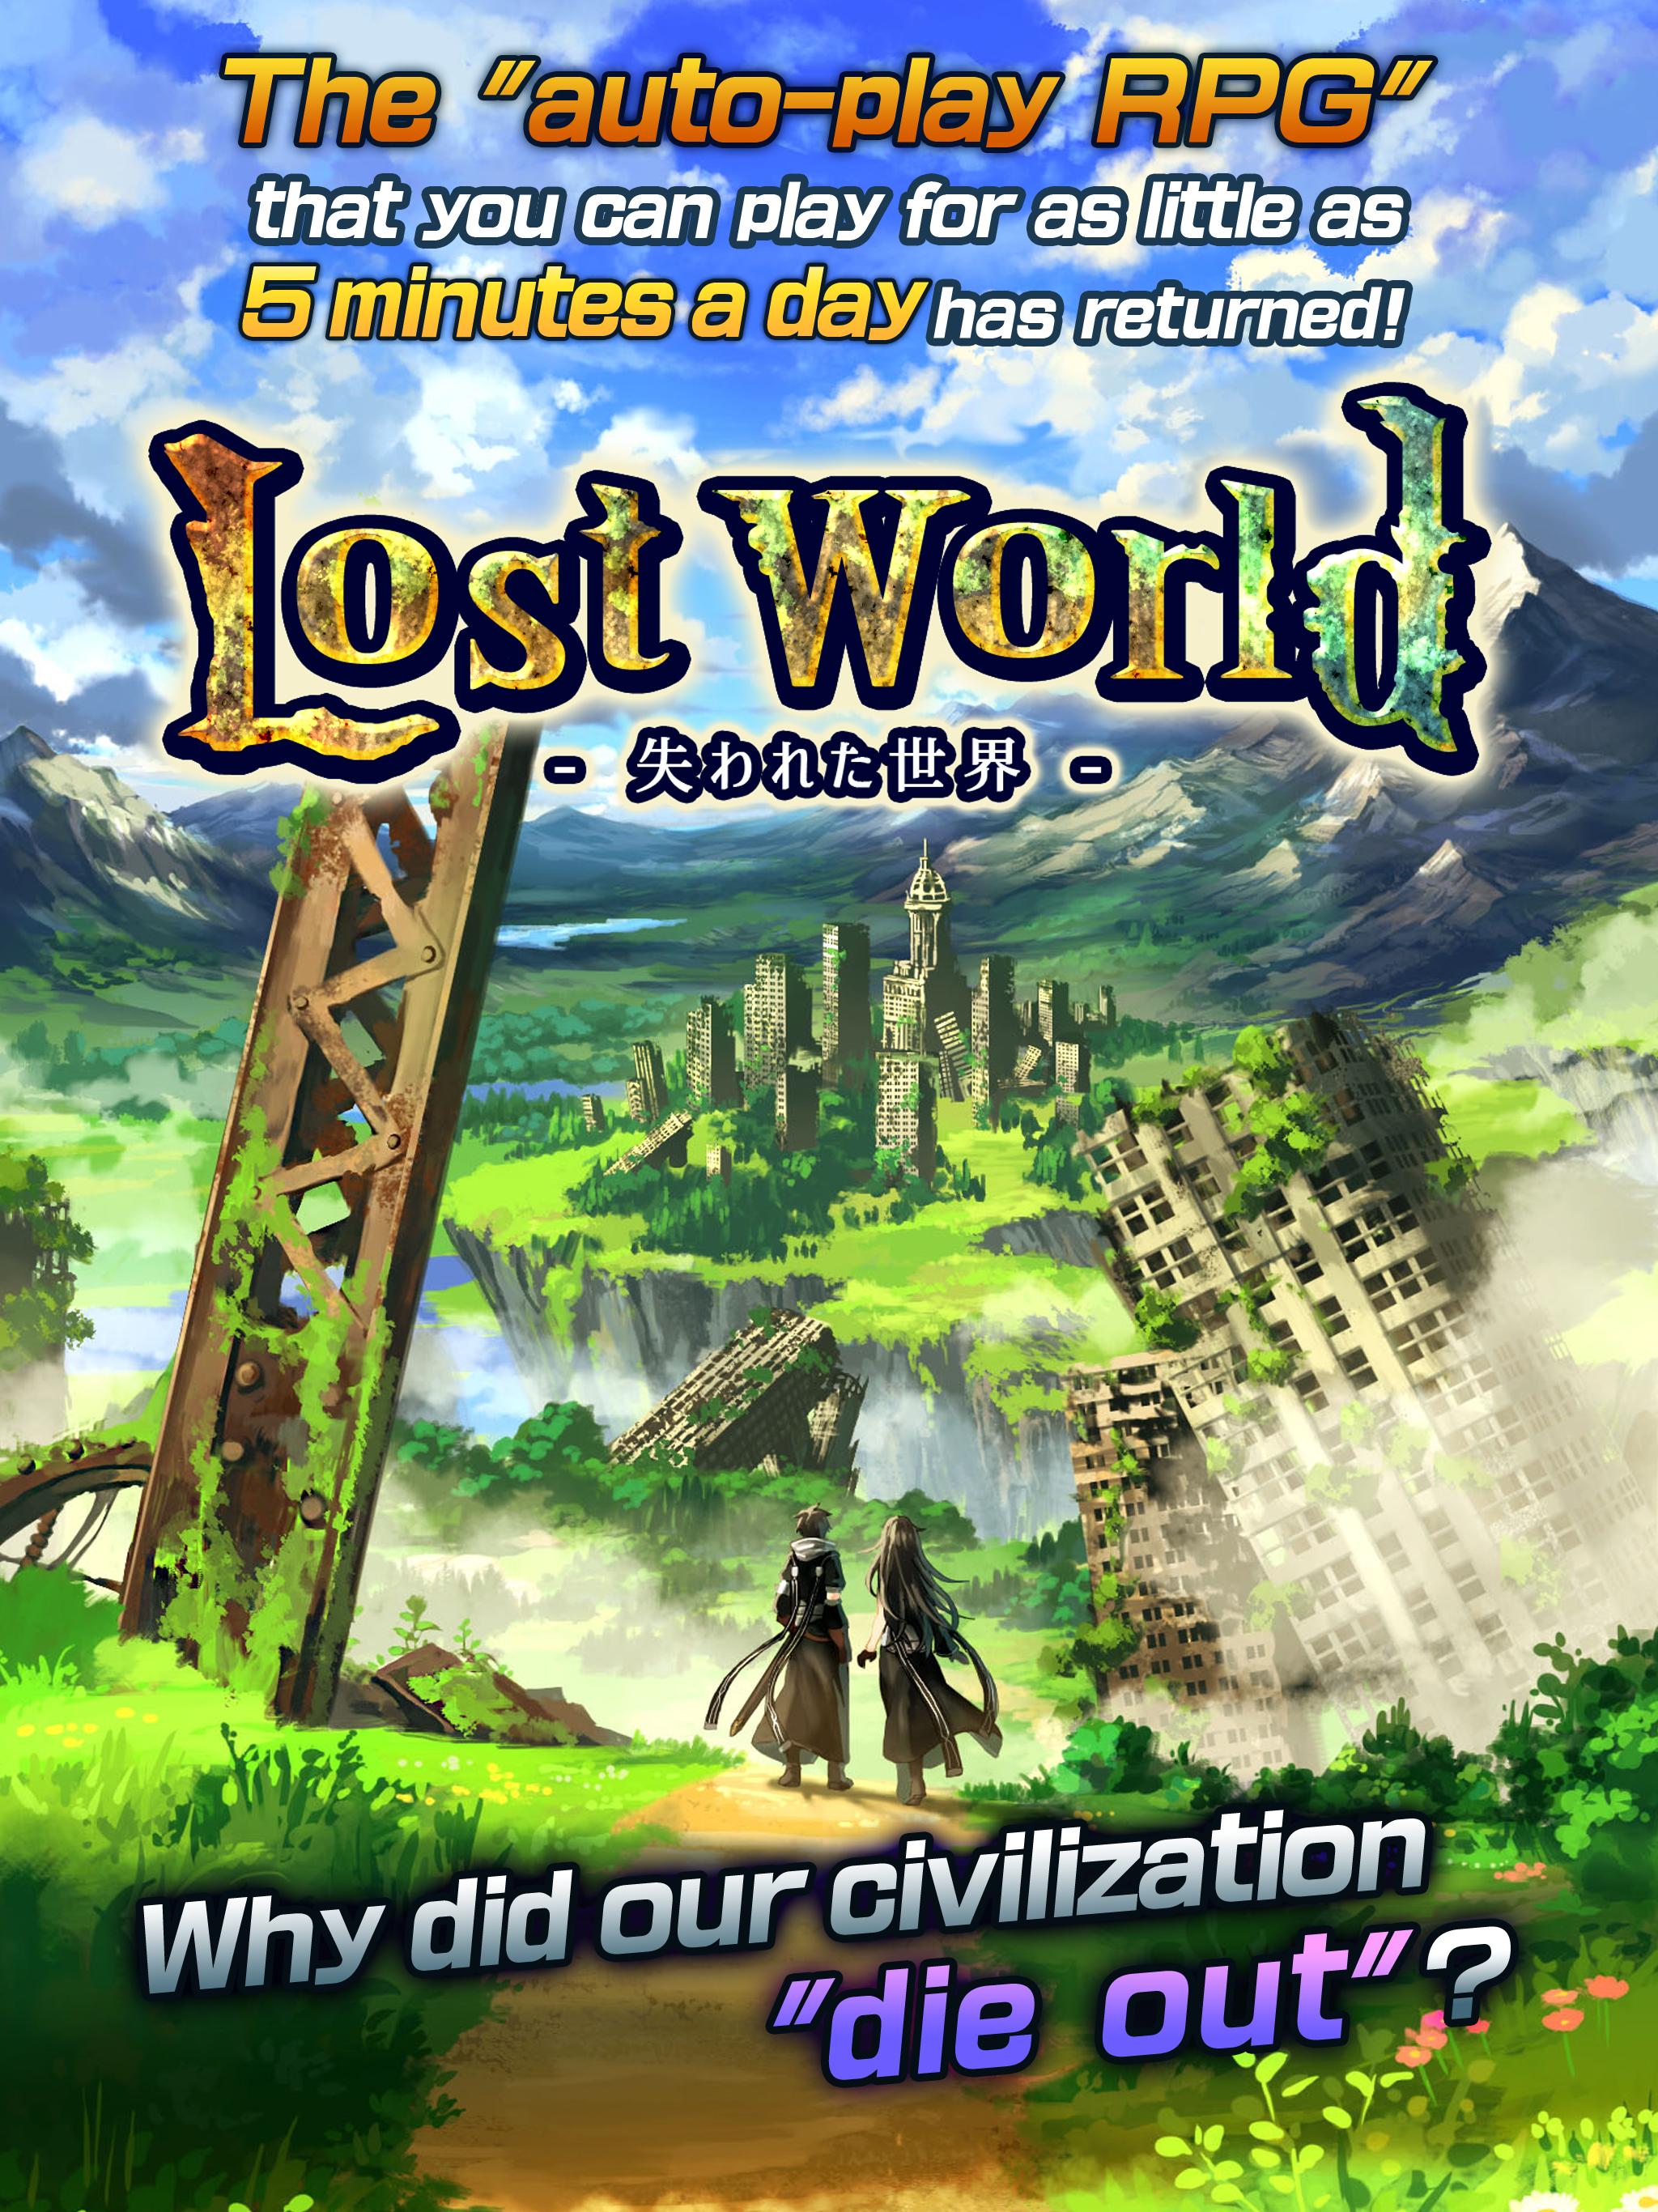 Lost World - 失われた世界 - 1.2.2 Screenshot 11